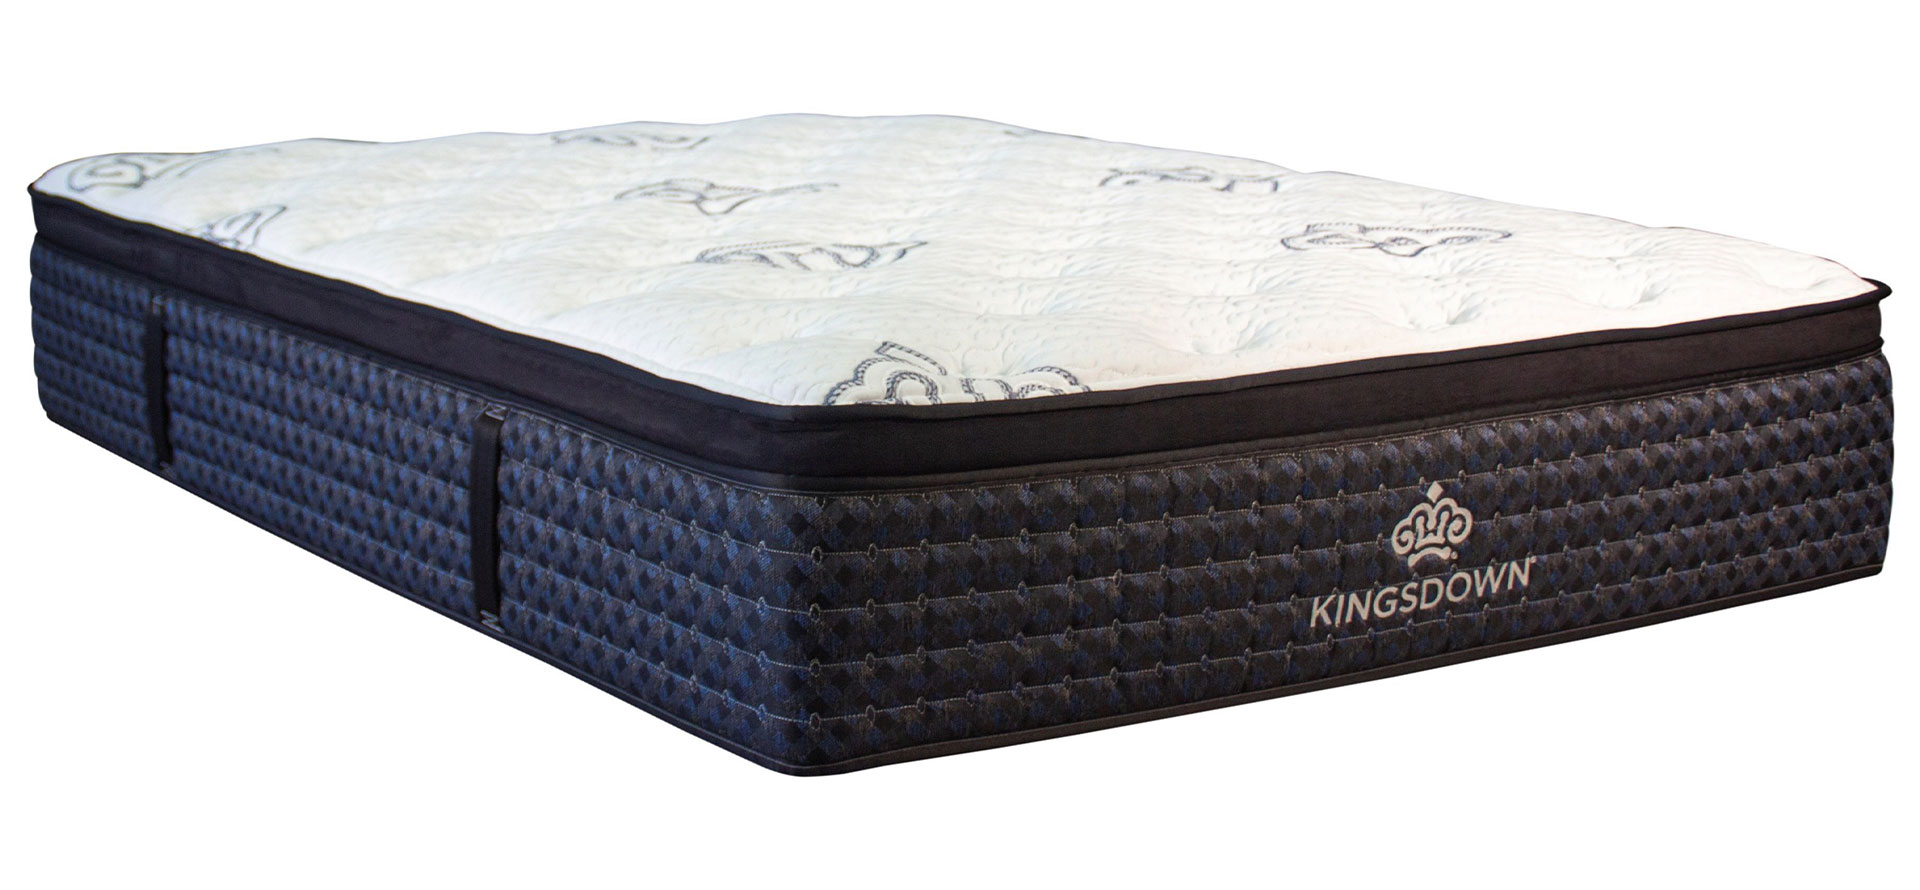 Kingsdown king mattress.